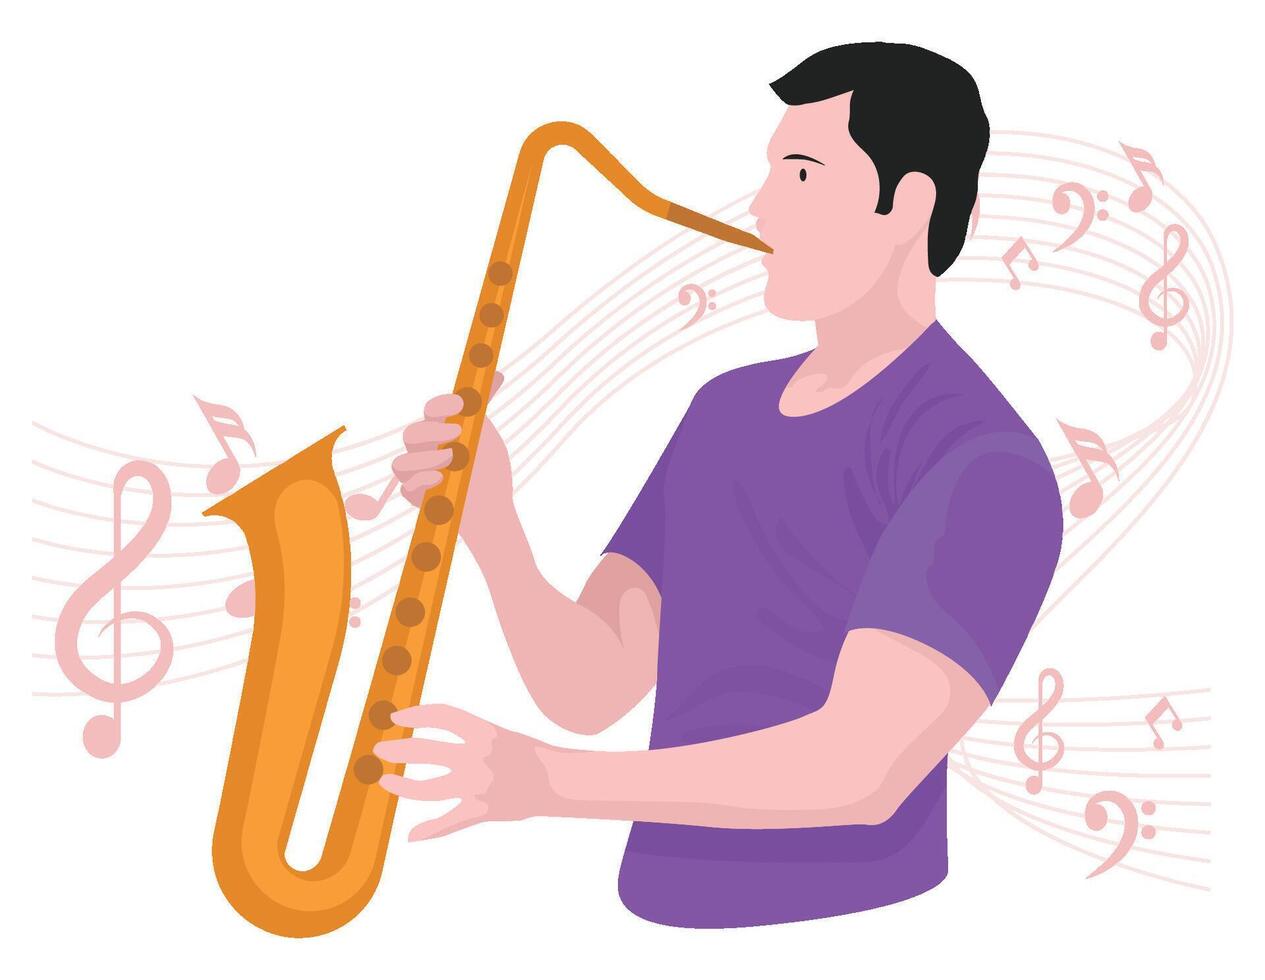 Boy playing Saxophone - Musical rock band illustration vector